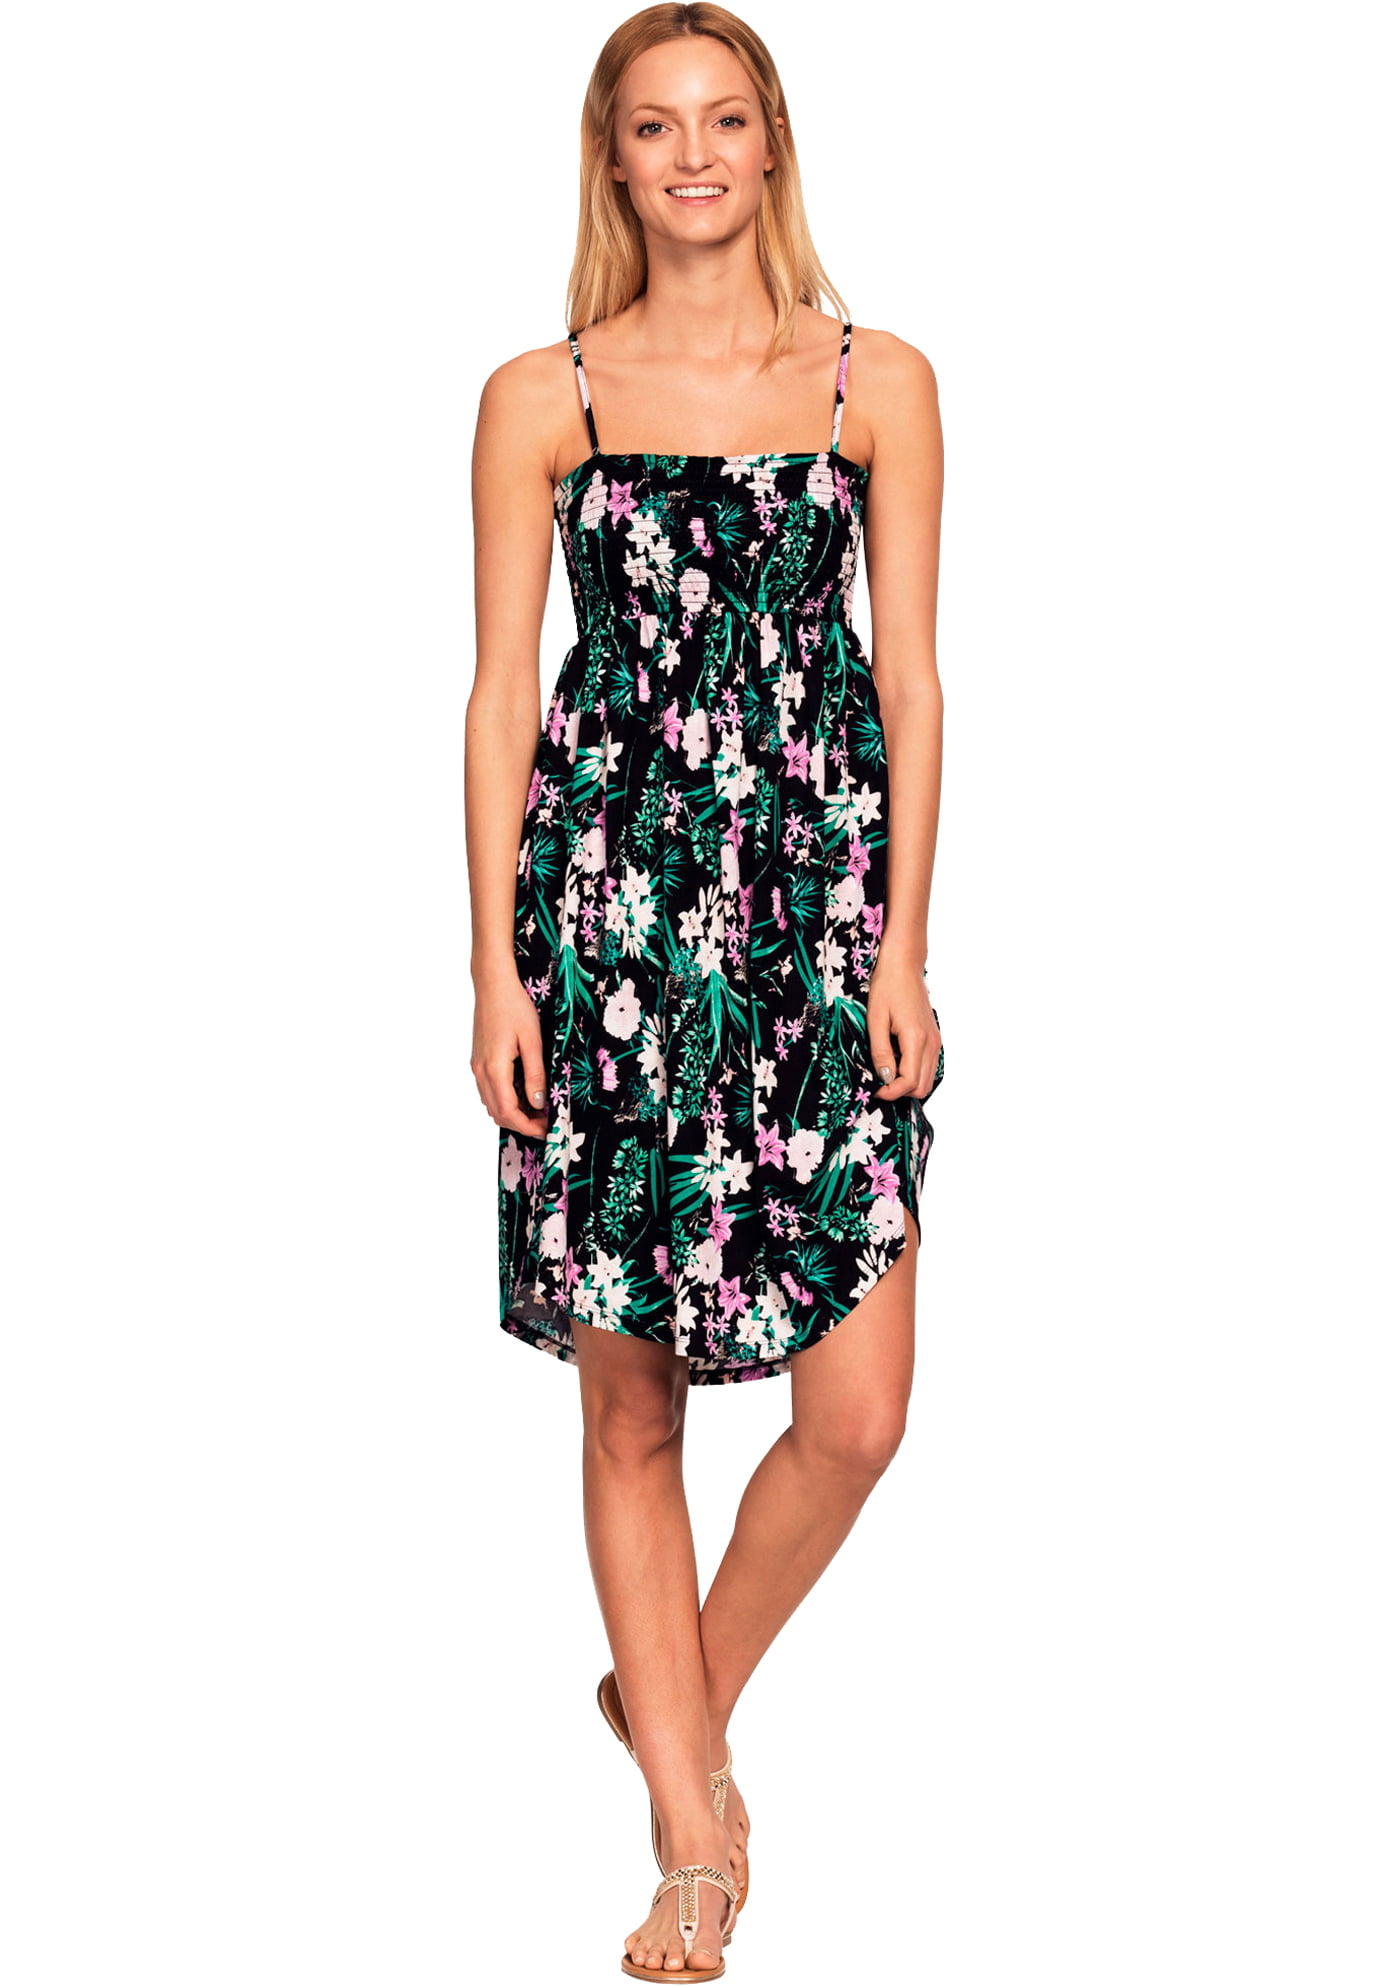 Ellos Women's Smocked Bodice Tank Dress Dress - Walmart.com